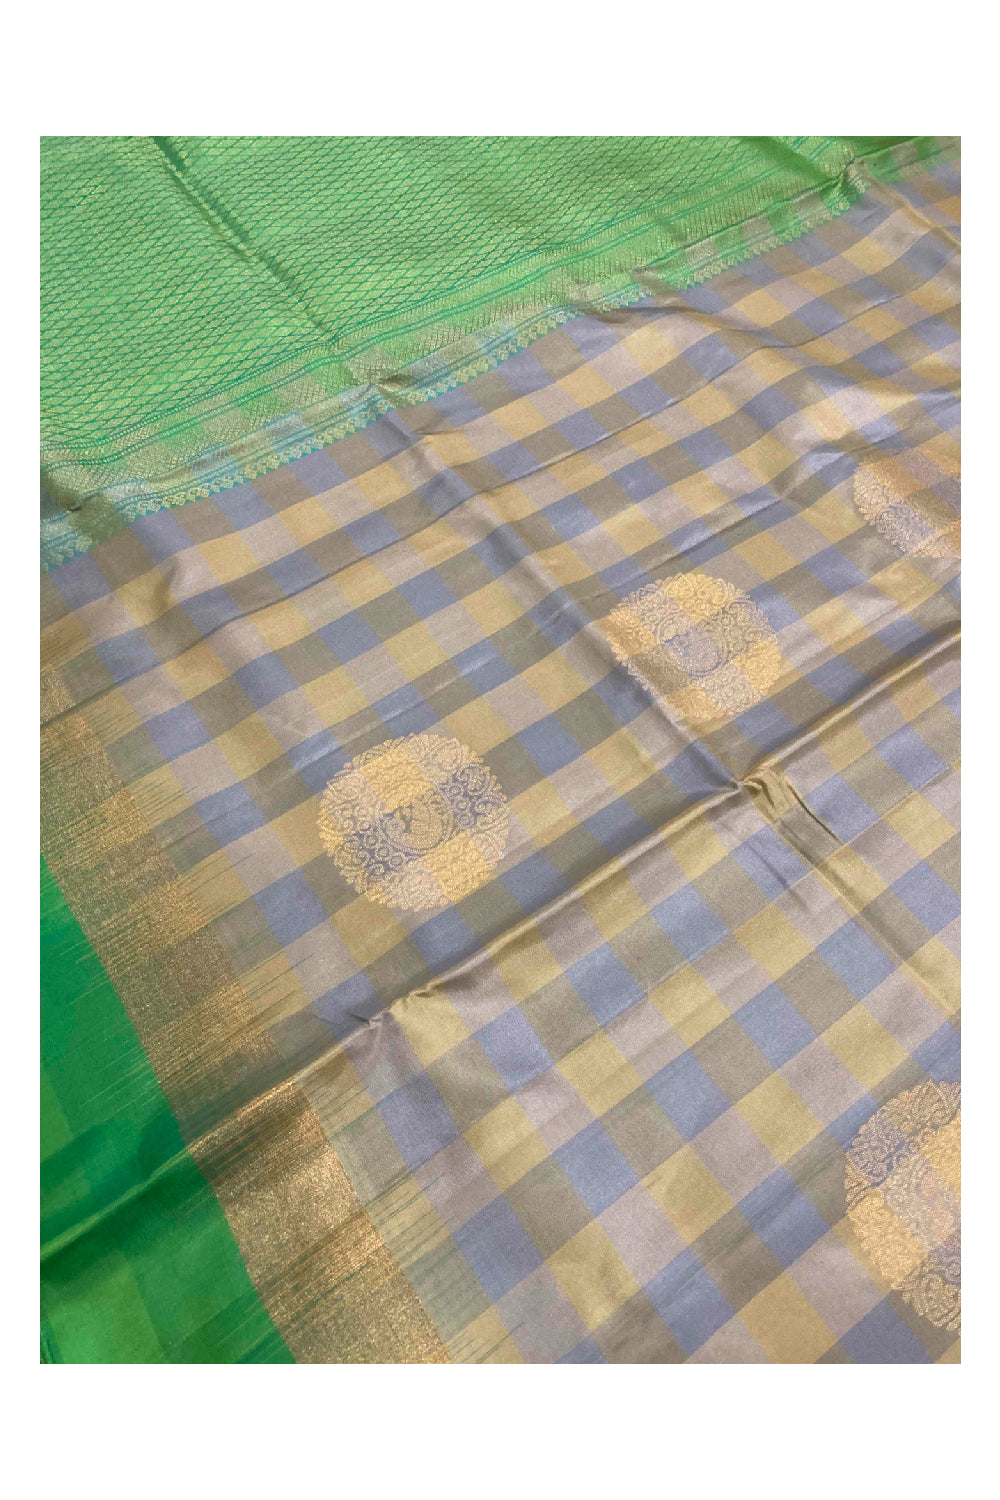 Southloom Handloom Pure Silk Kanchipuram Saree in Yellow Blue Check Design and Floral Motifs